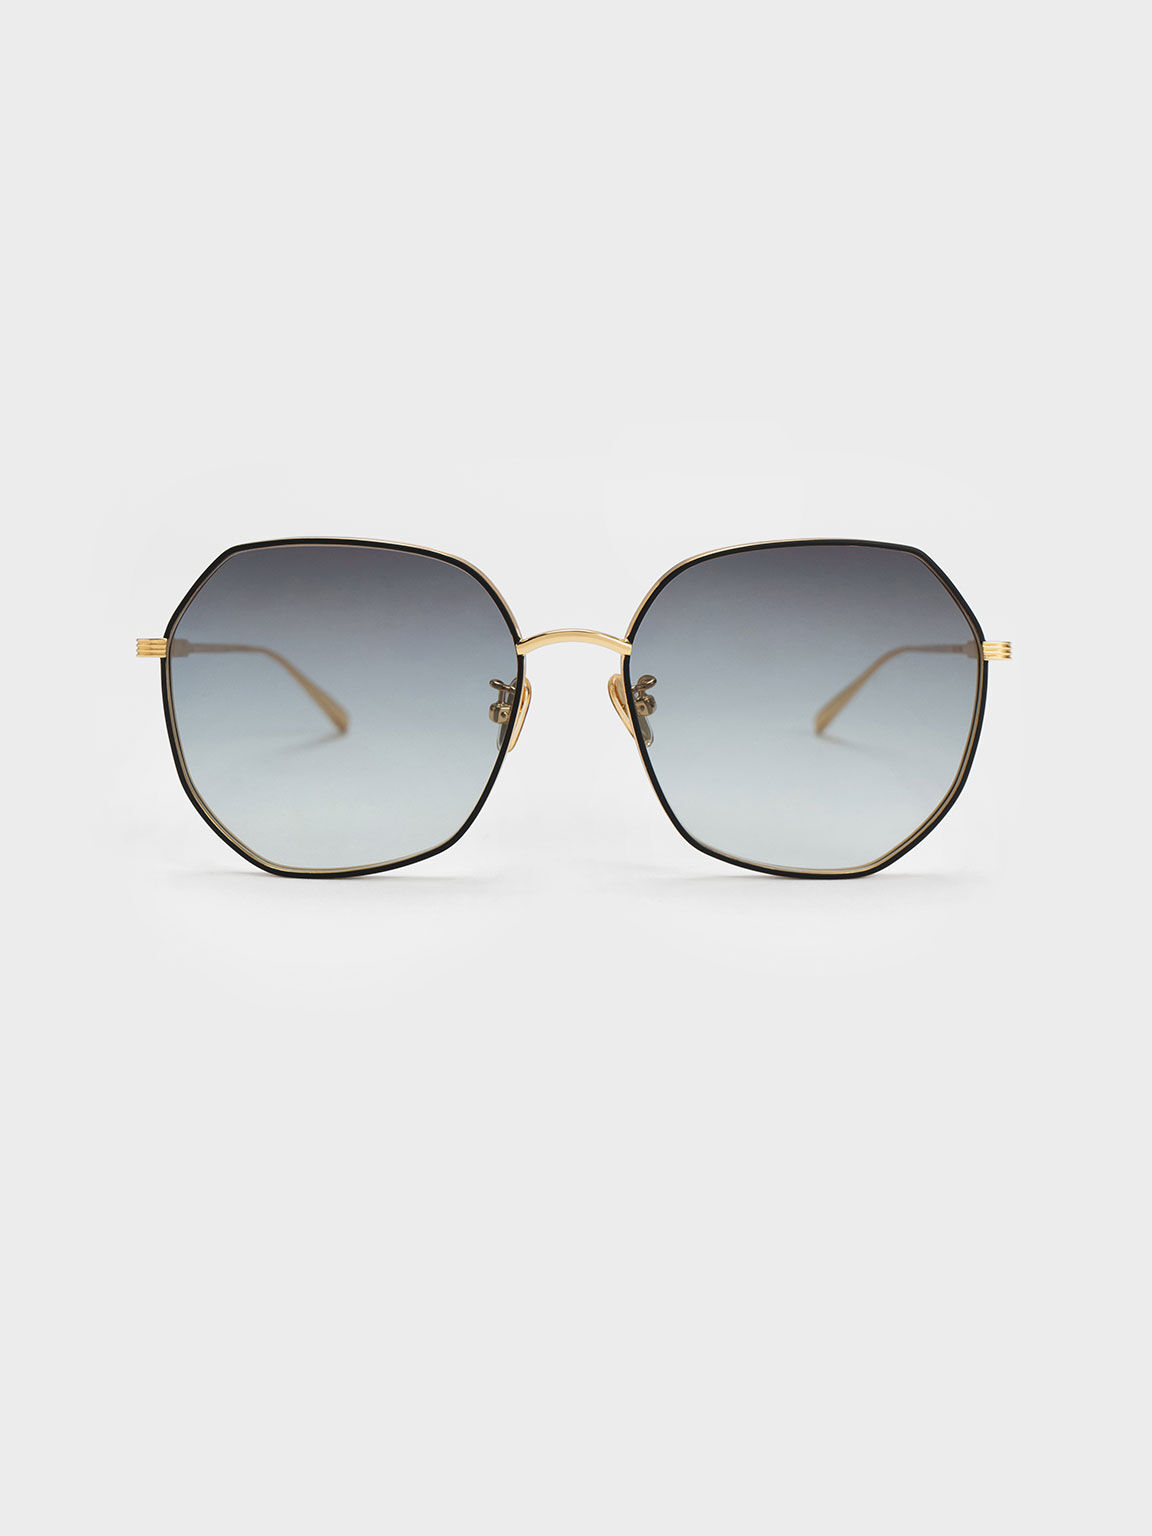 Tinted Geometric Sunglasses, Black, hi-res